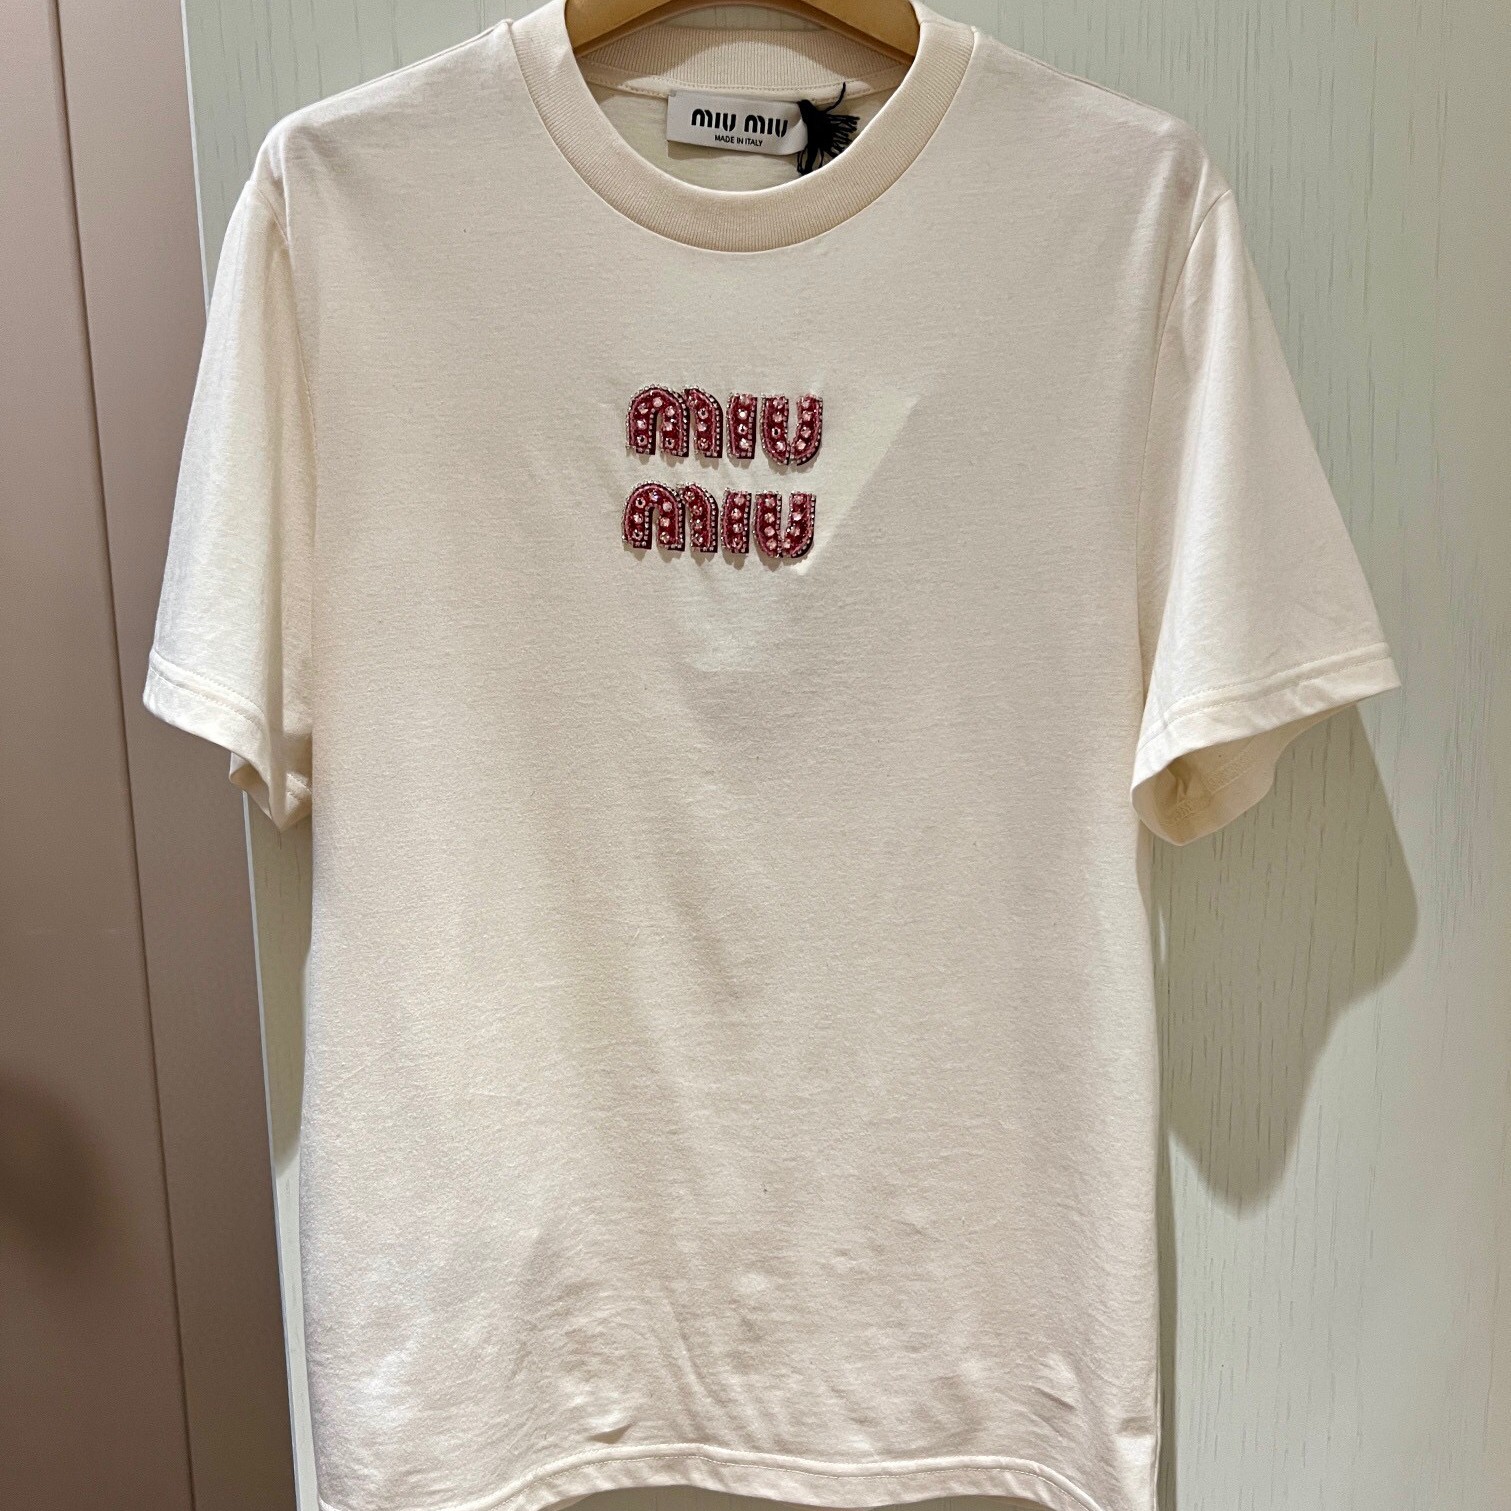 9A+ quality miumiu jersey t-shirt